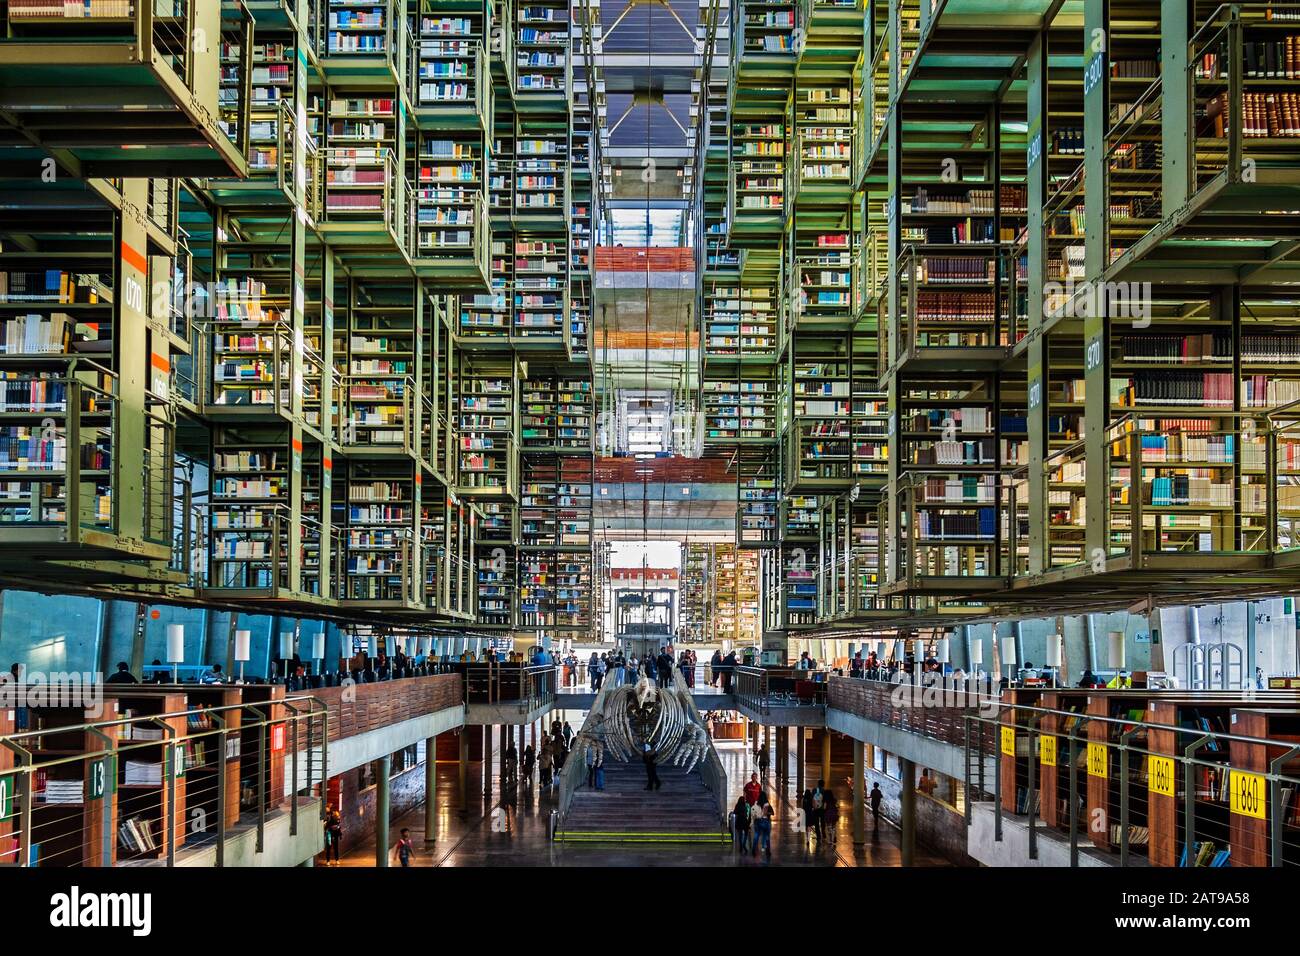 View of the interiors of architectural landmark Vasconcelos Library (Biblioteca Vasconcelos) in Mexico City, Mexico. Stock Photo